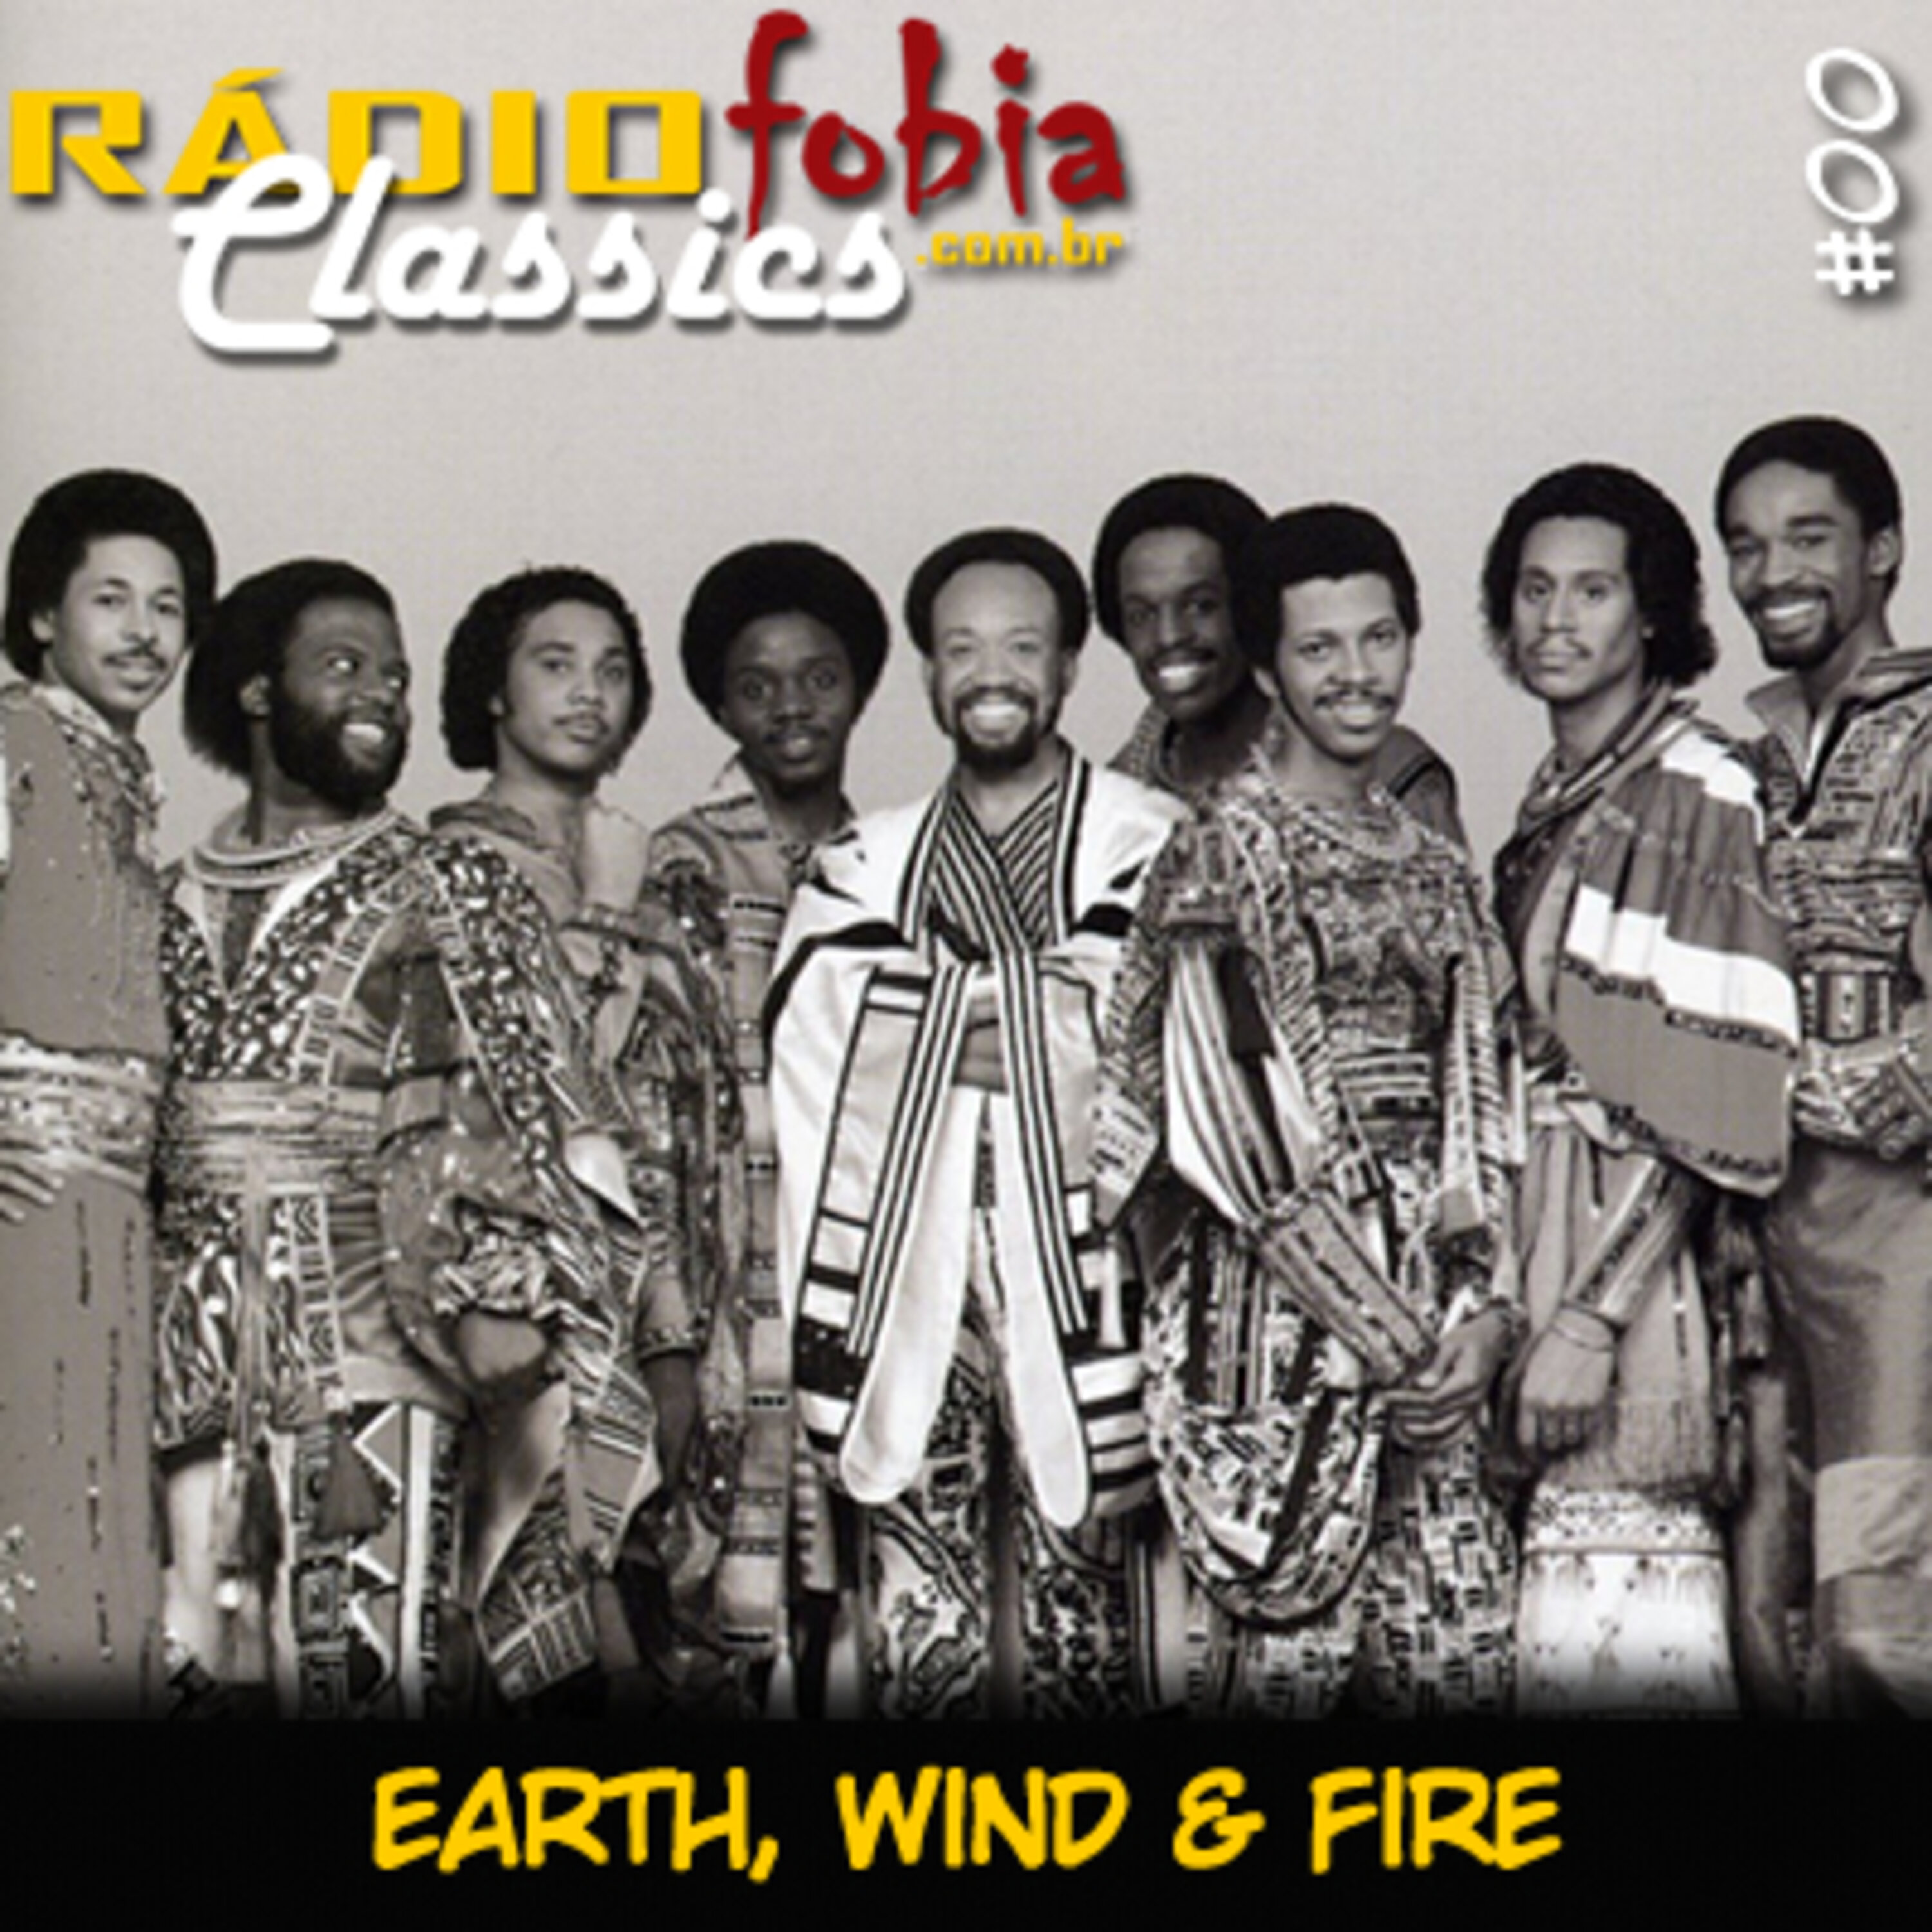 RÁDIOFOBIA Classics #00 – Piloto – Earth, Wind & Fire